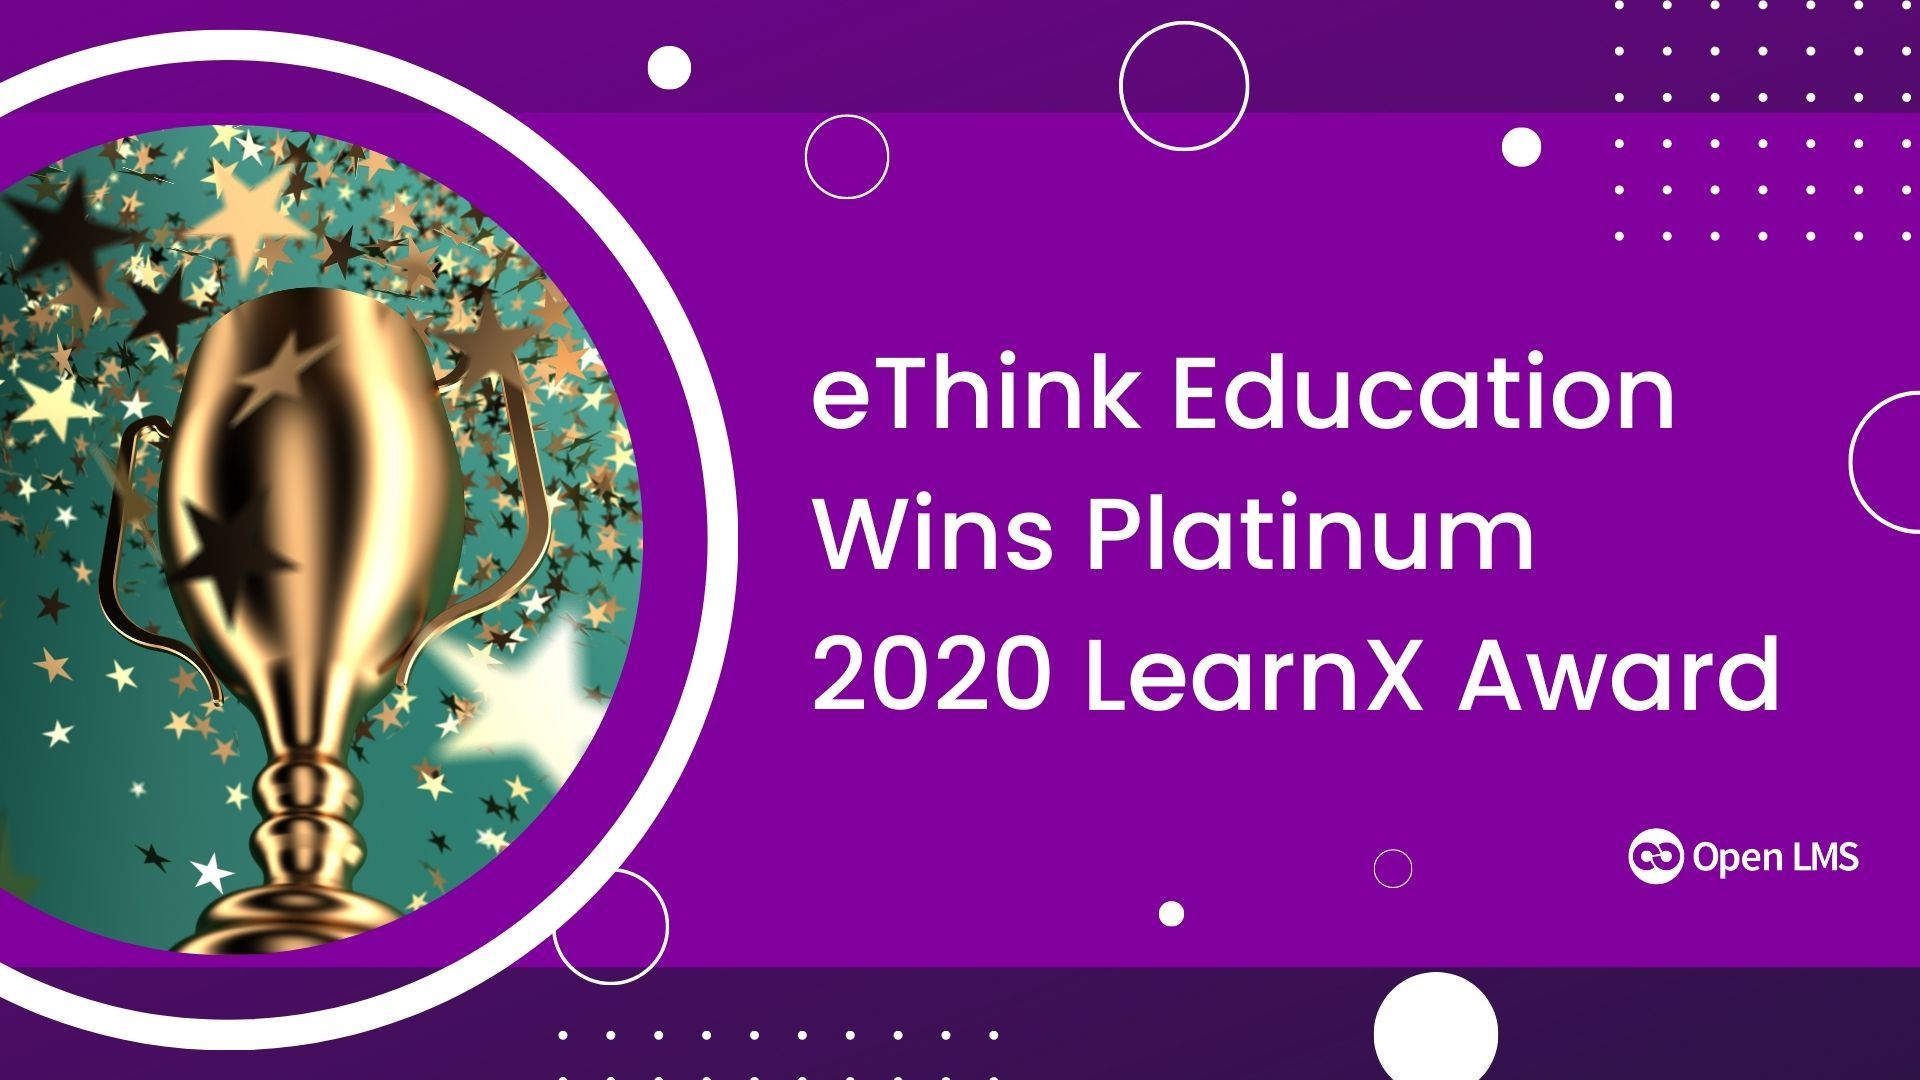 eThink Education Wins Platinum 2020 LearnX Award